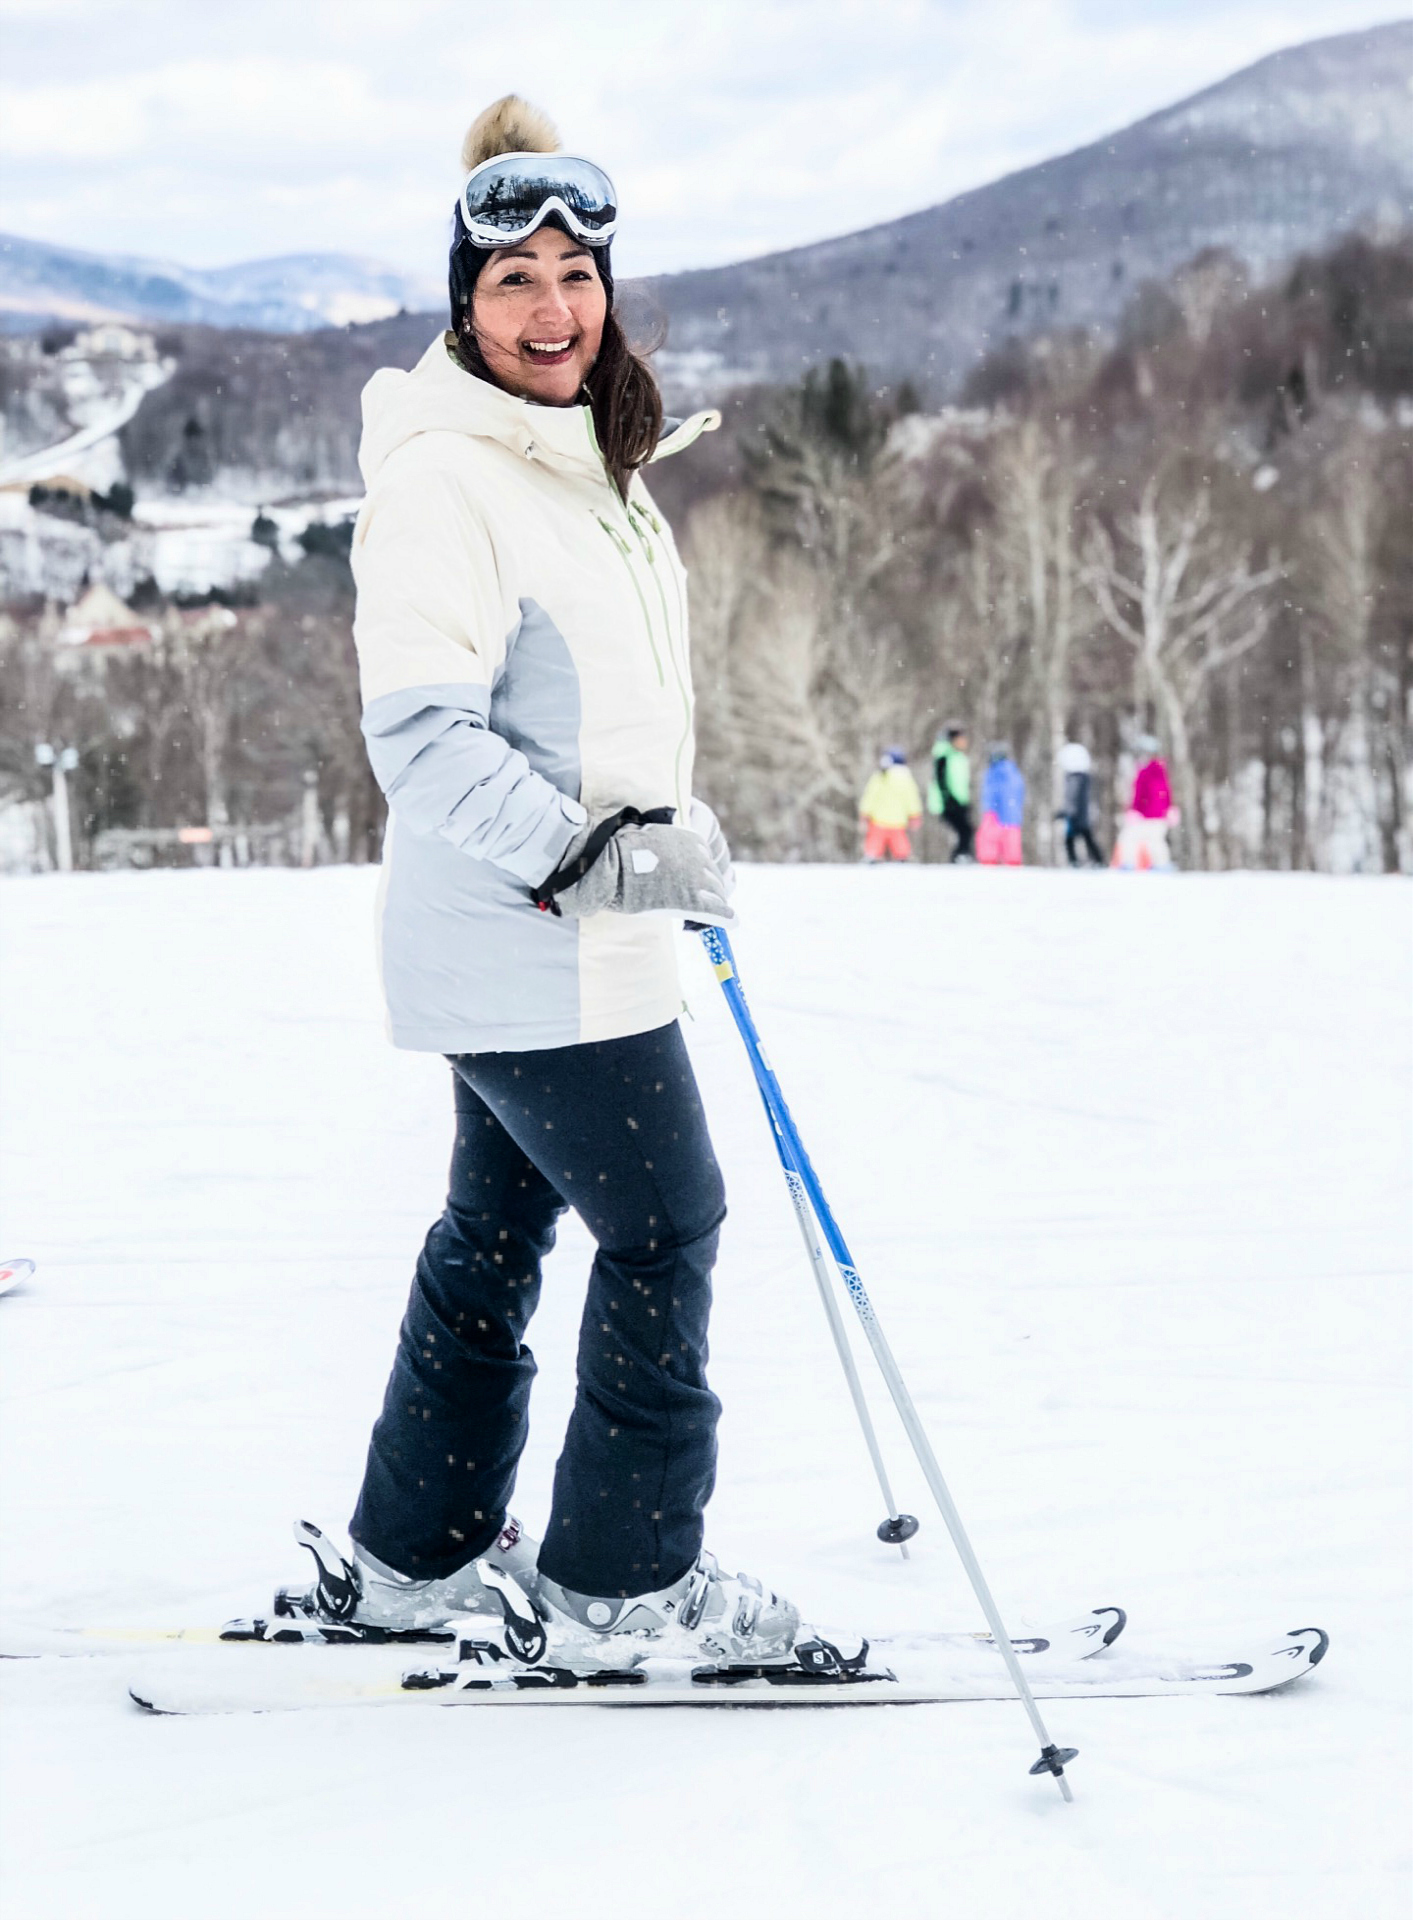 Ski season in New England